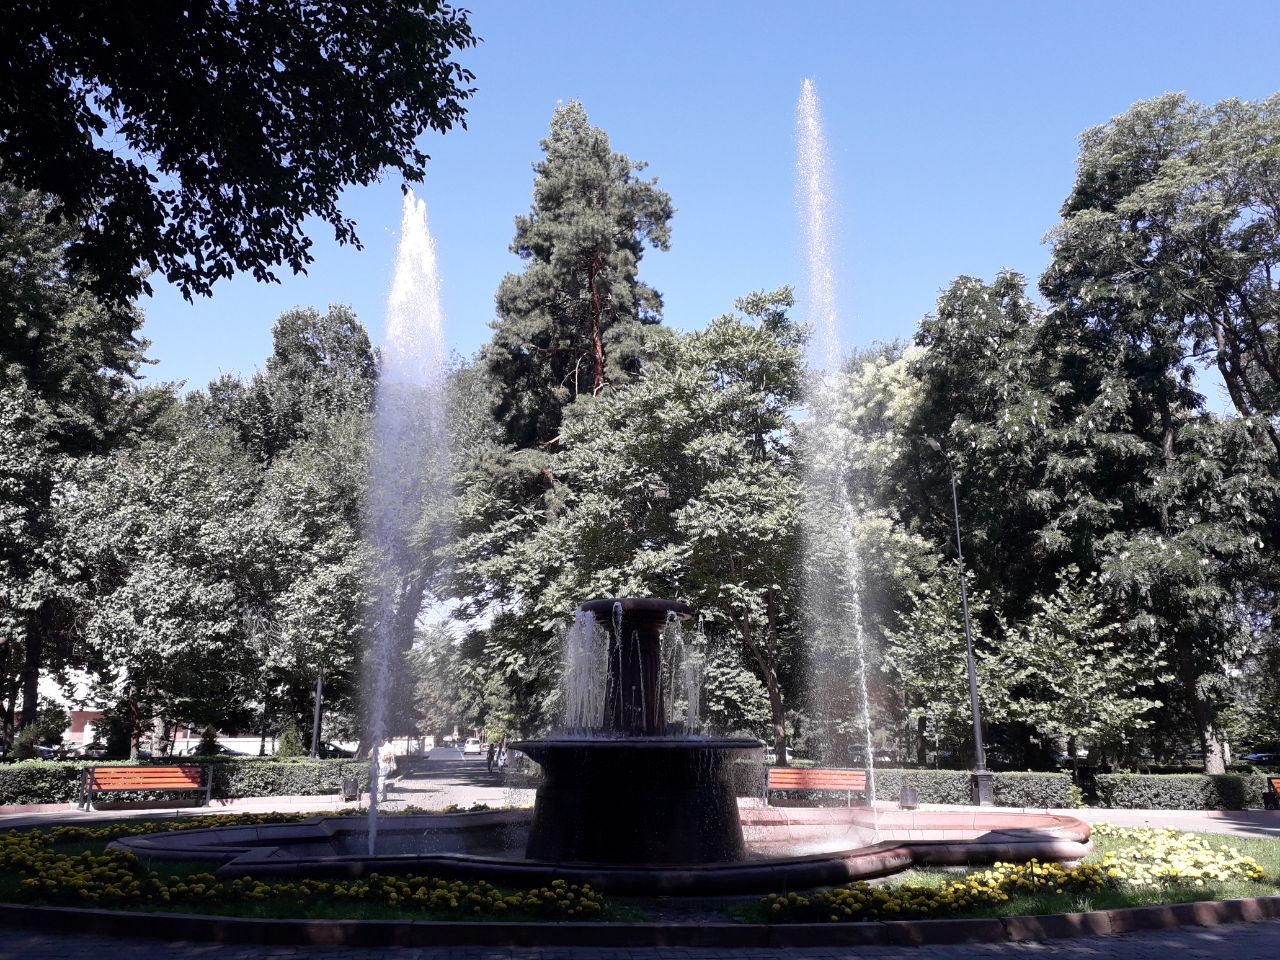 Дубовый парк. Фонтан / Oak Park. Fountain